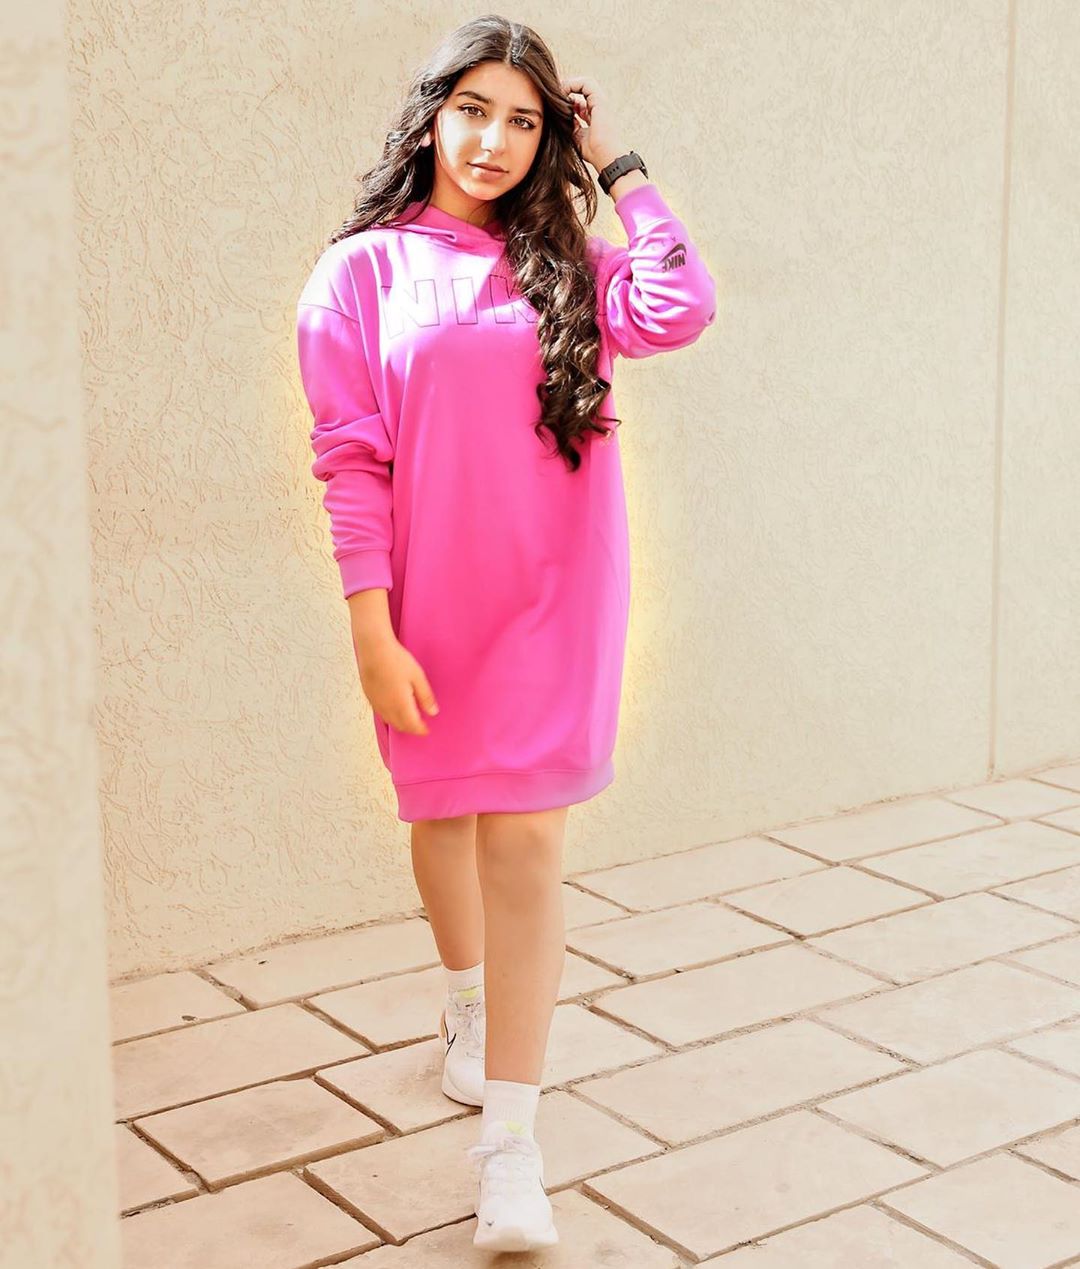 Ghrour Safar Pink Dress Teen Girl Photo 05